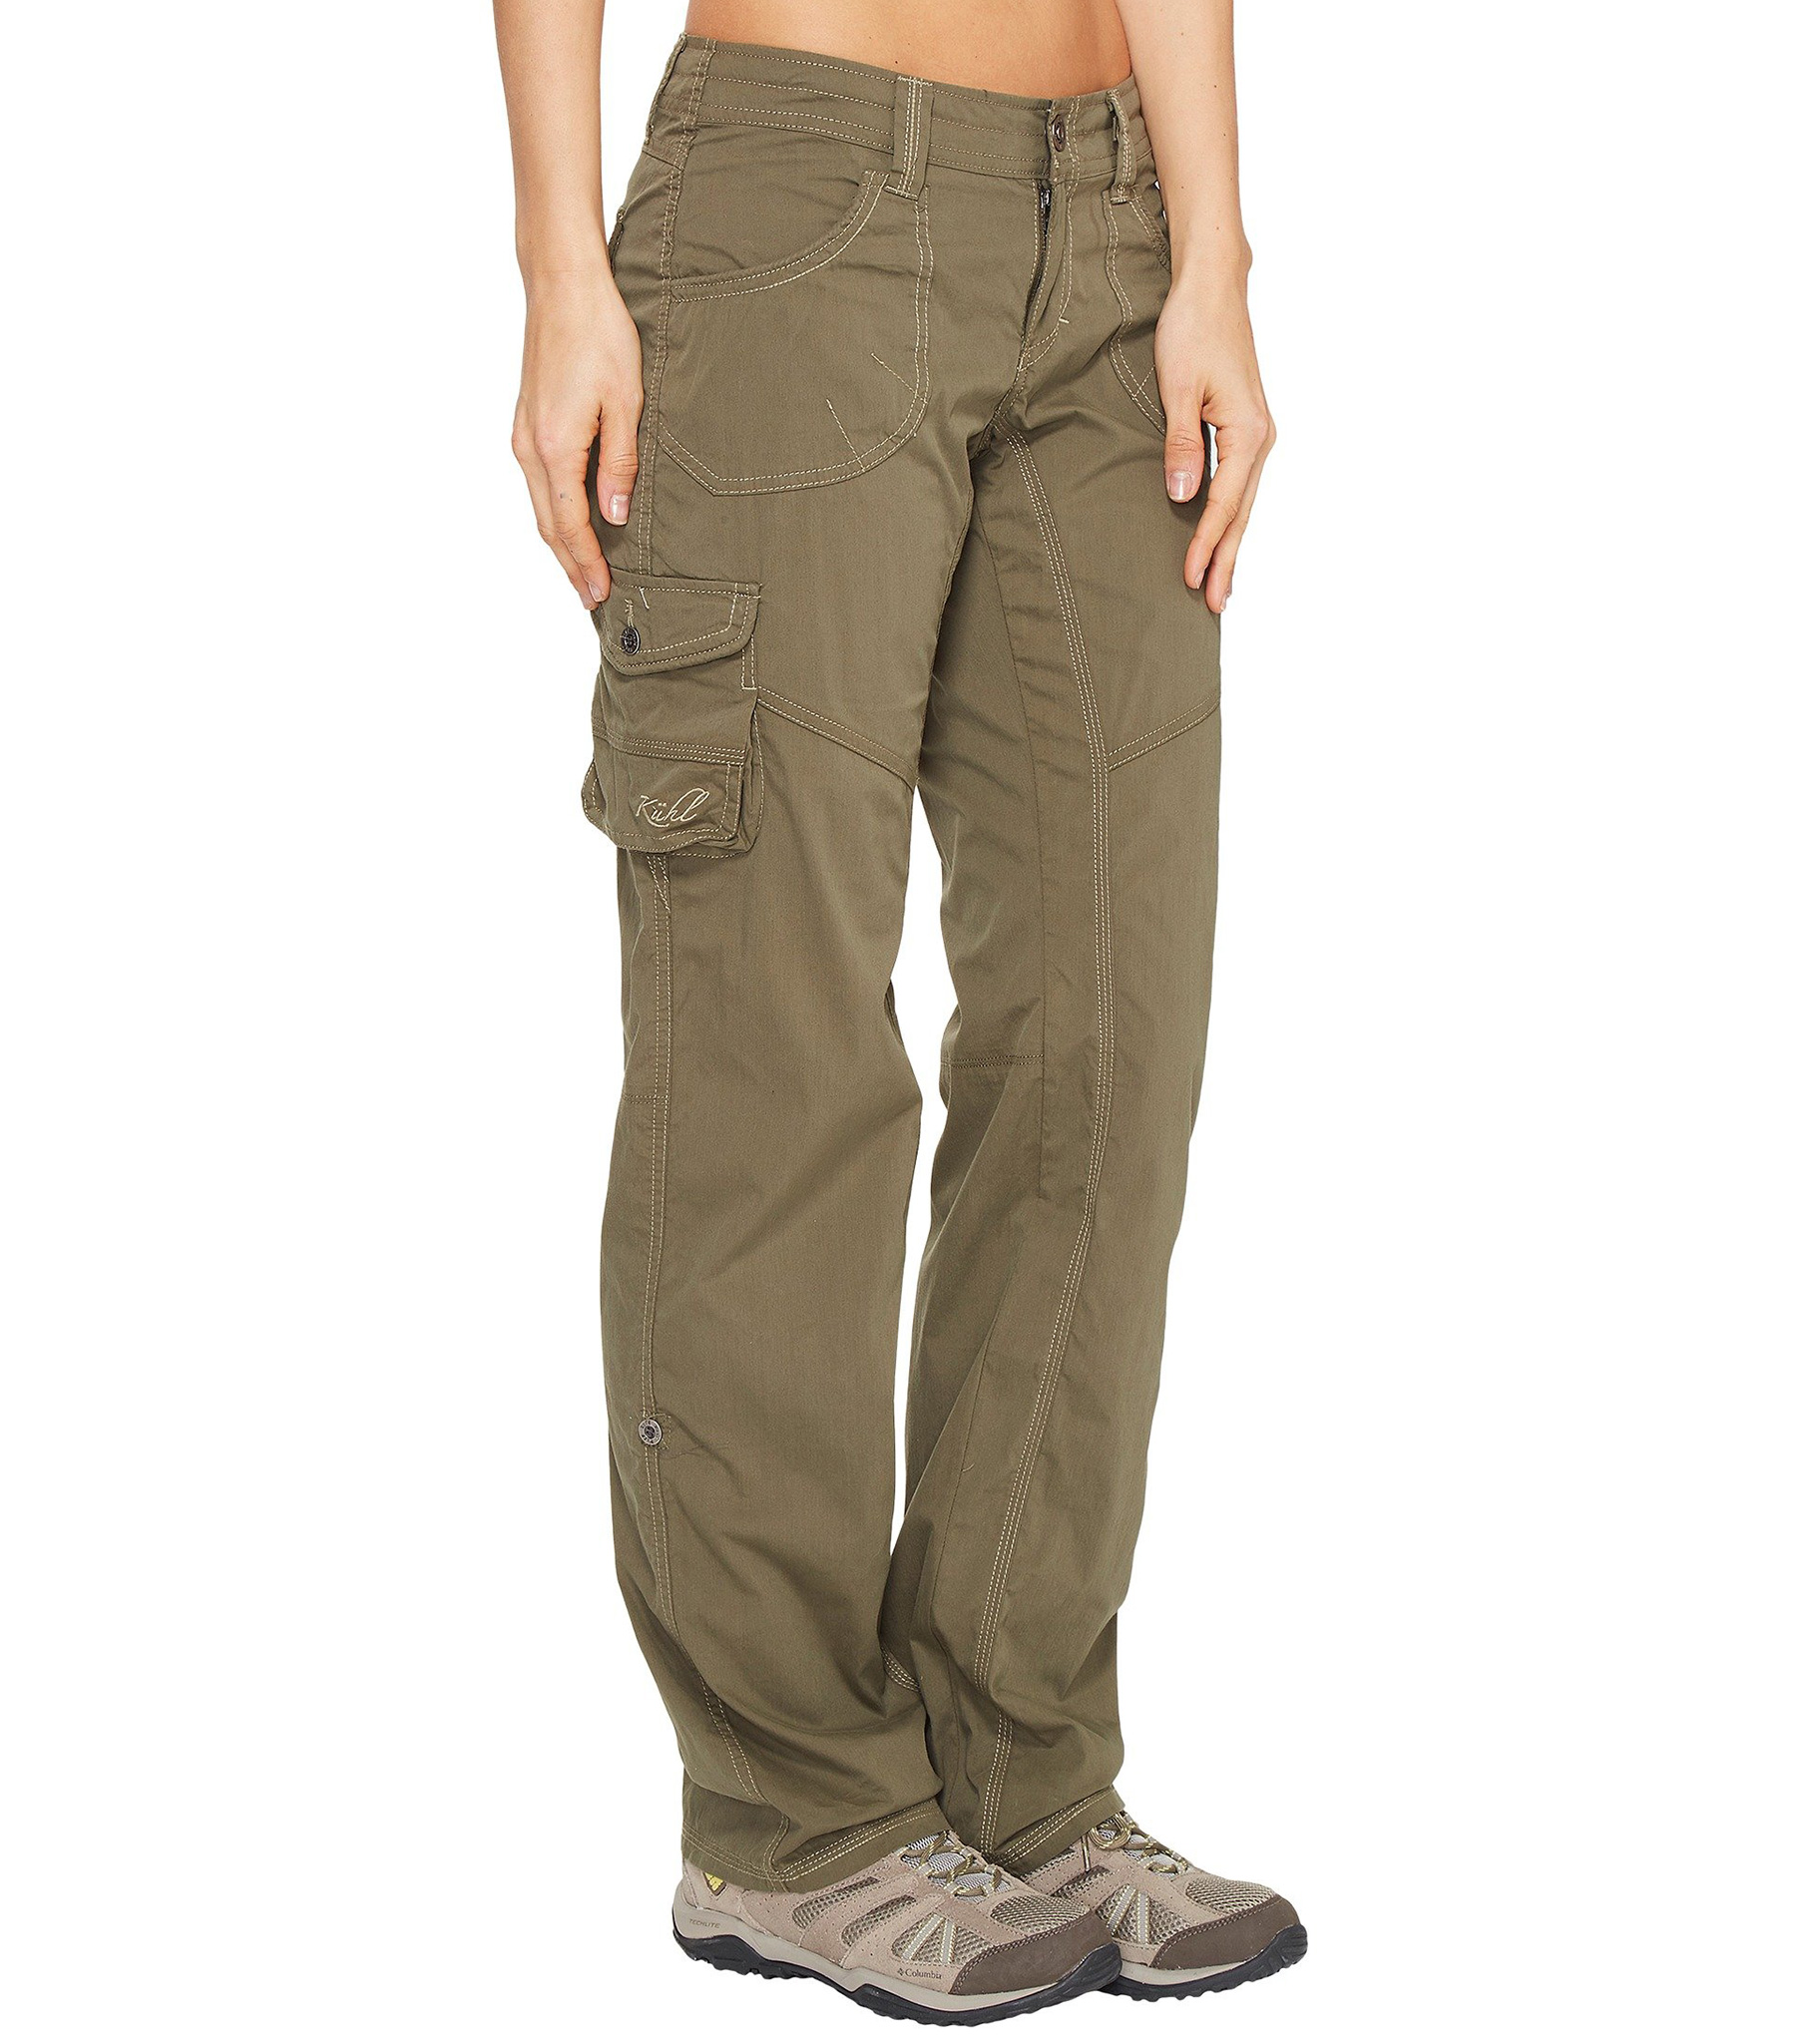 Bella Hadid and Kaia Gerber Wear Cargo Pants Trend: Shop